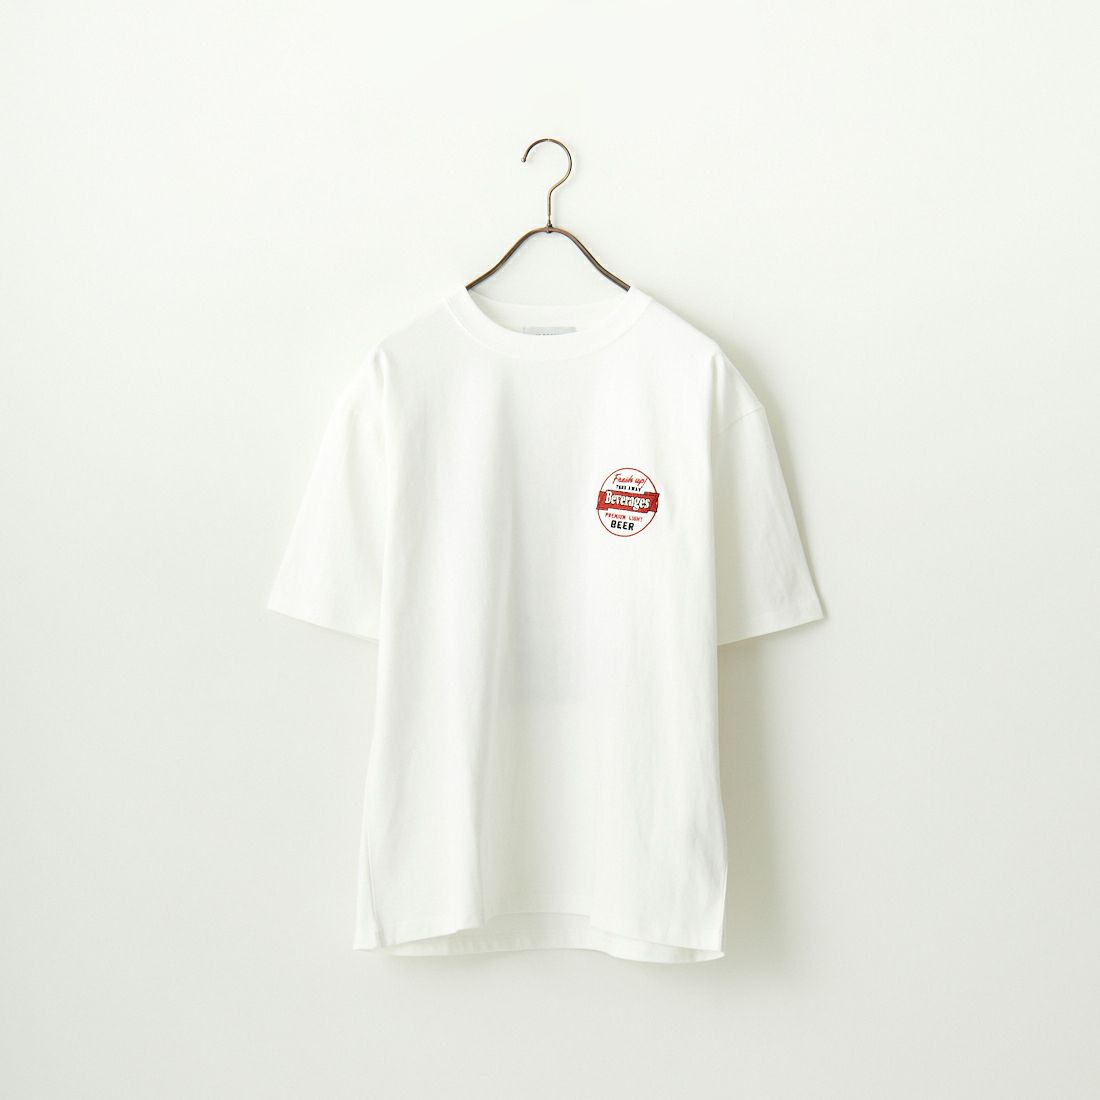 33Degrees [サーティスリーディグリーズ] 刺繍Tシャツ [TDR-242-021] 81 WHTBEER